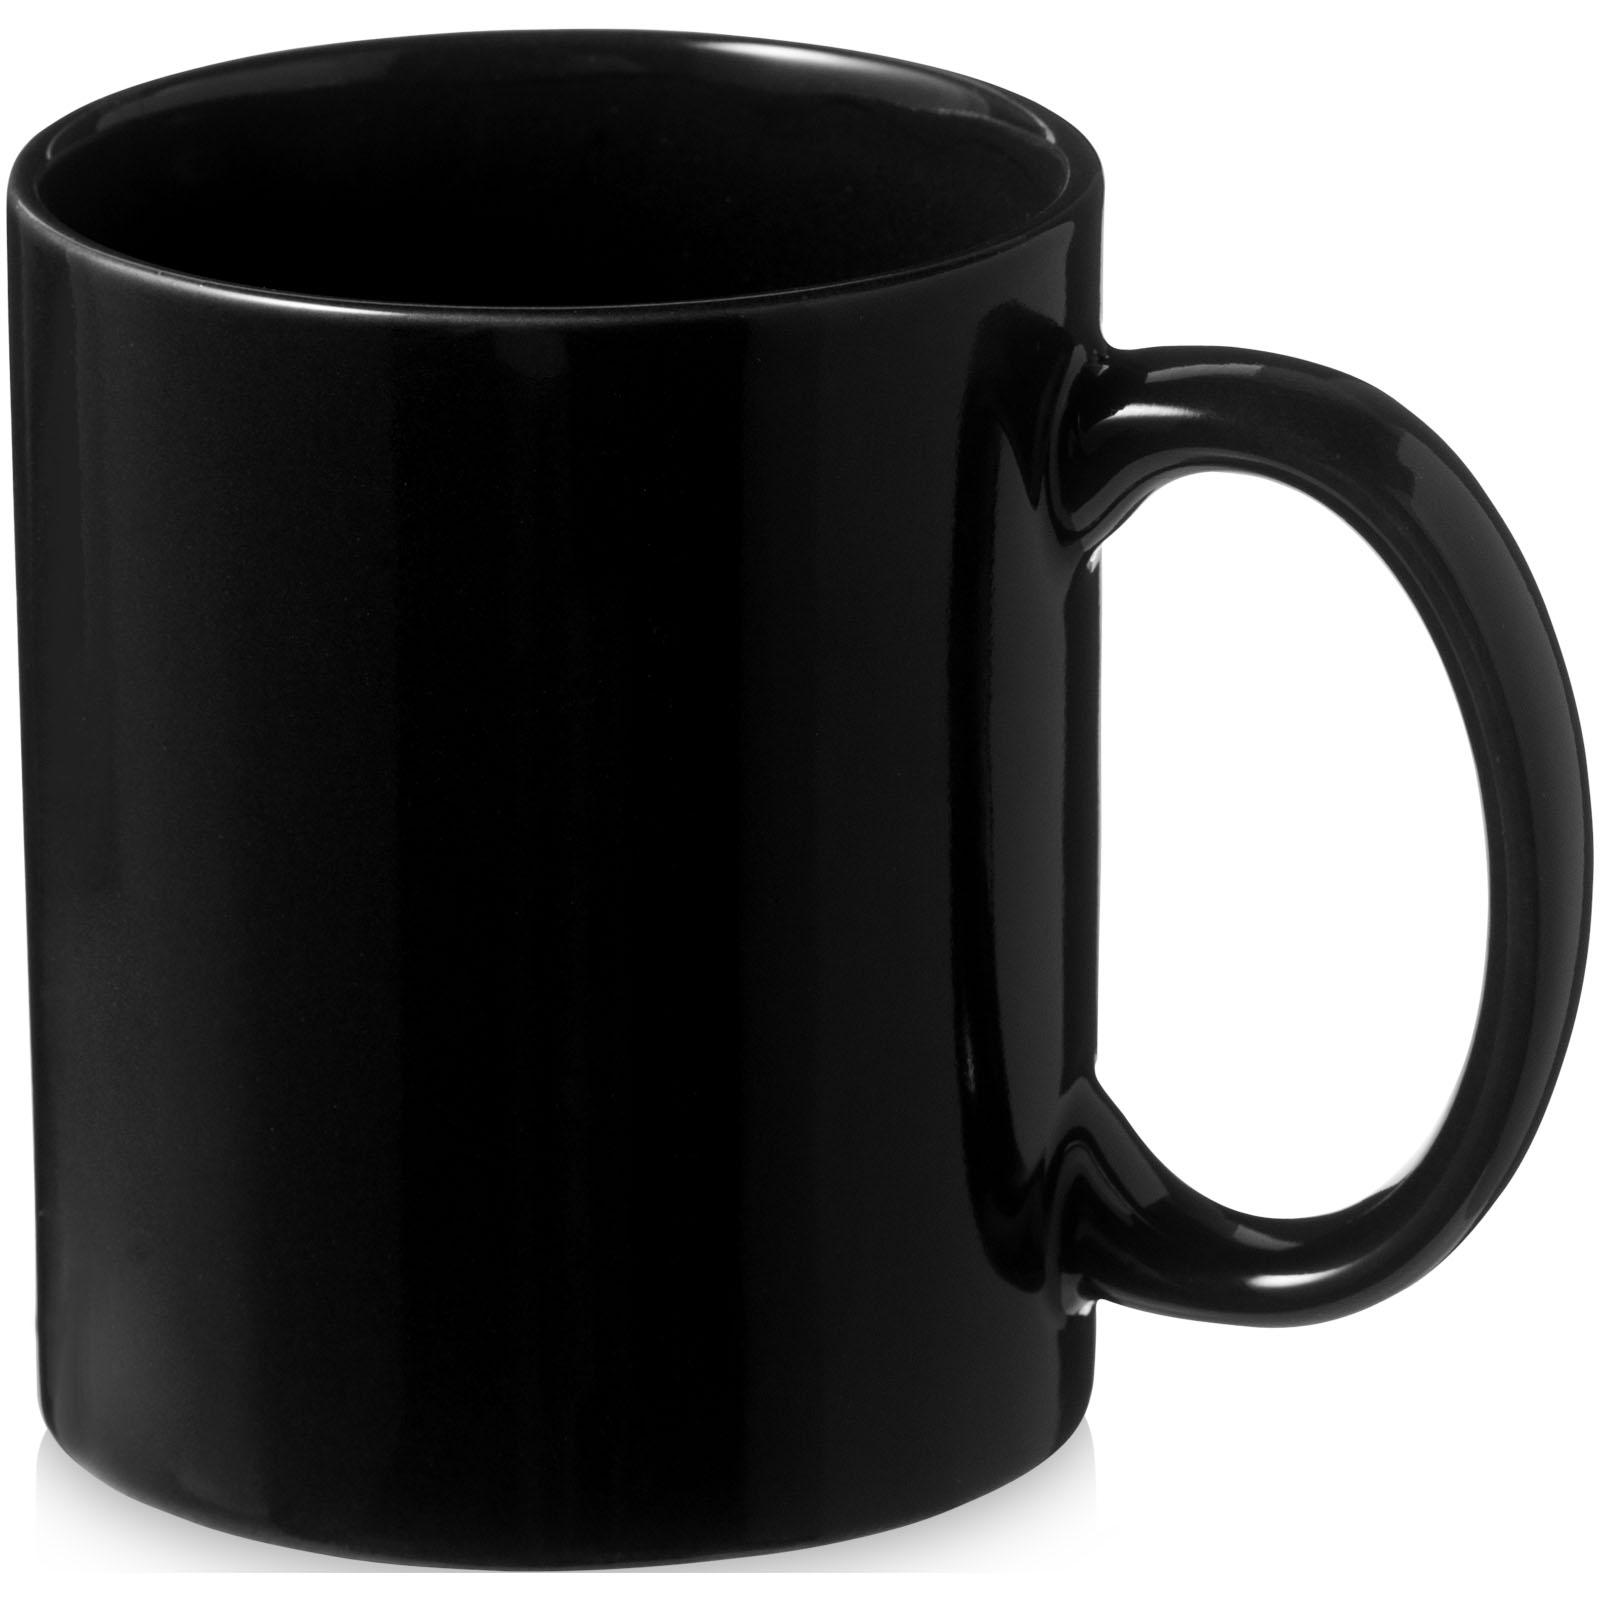 Standard mugs - Santos 330 ml ceramic mug